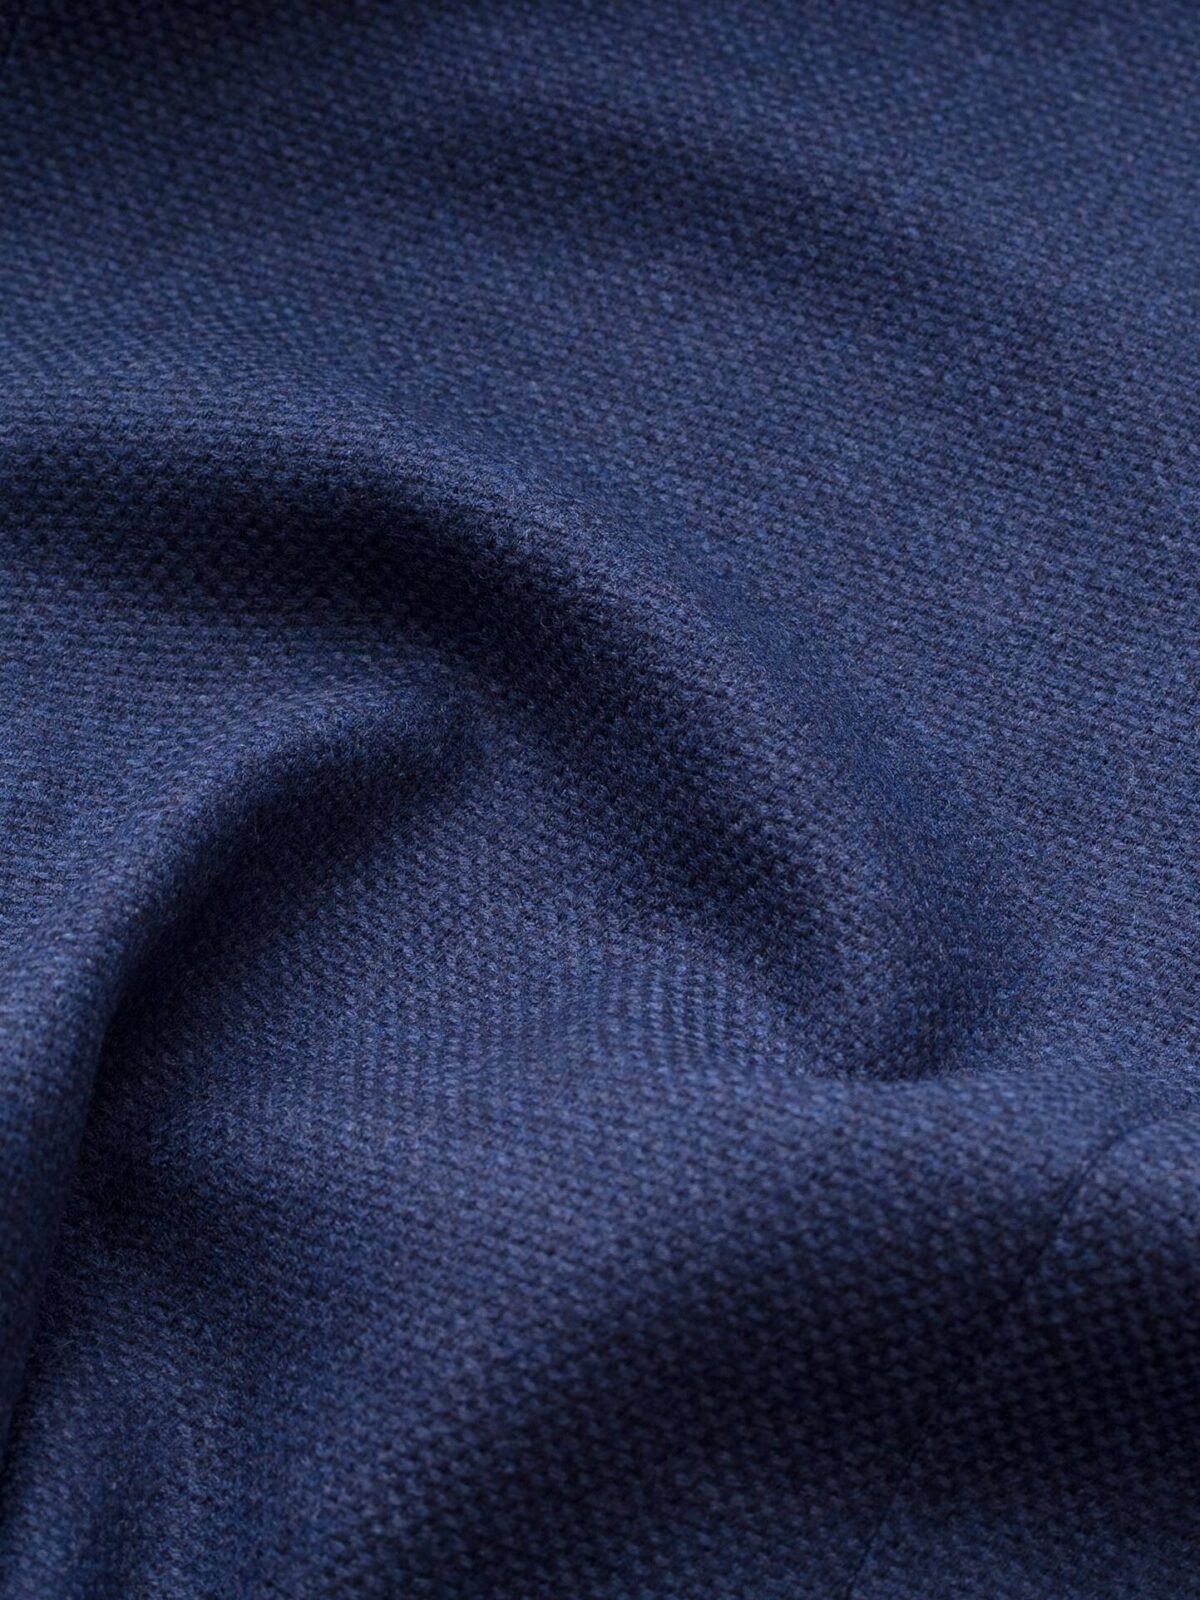 Hudson Ocean Blue Wool Flannel Hopsack Jacket